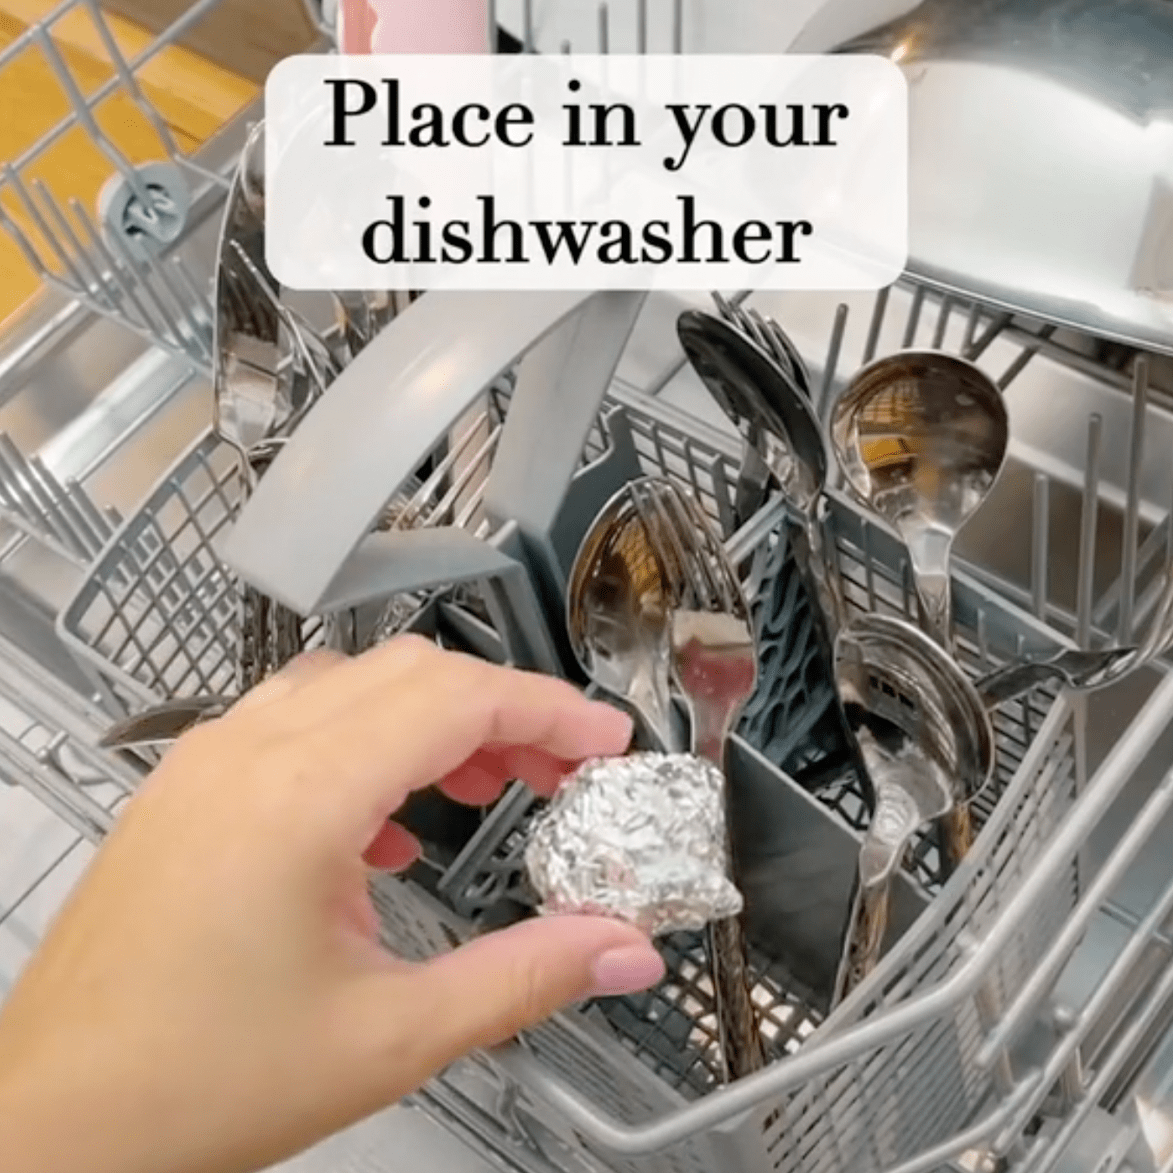 Should I Really Put Aluminum Foil in the Dishwasher?